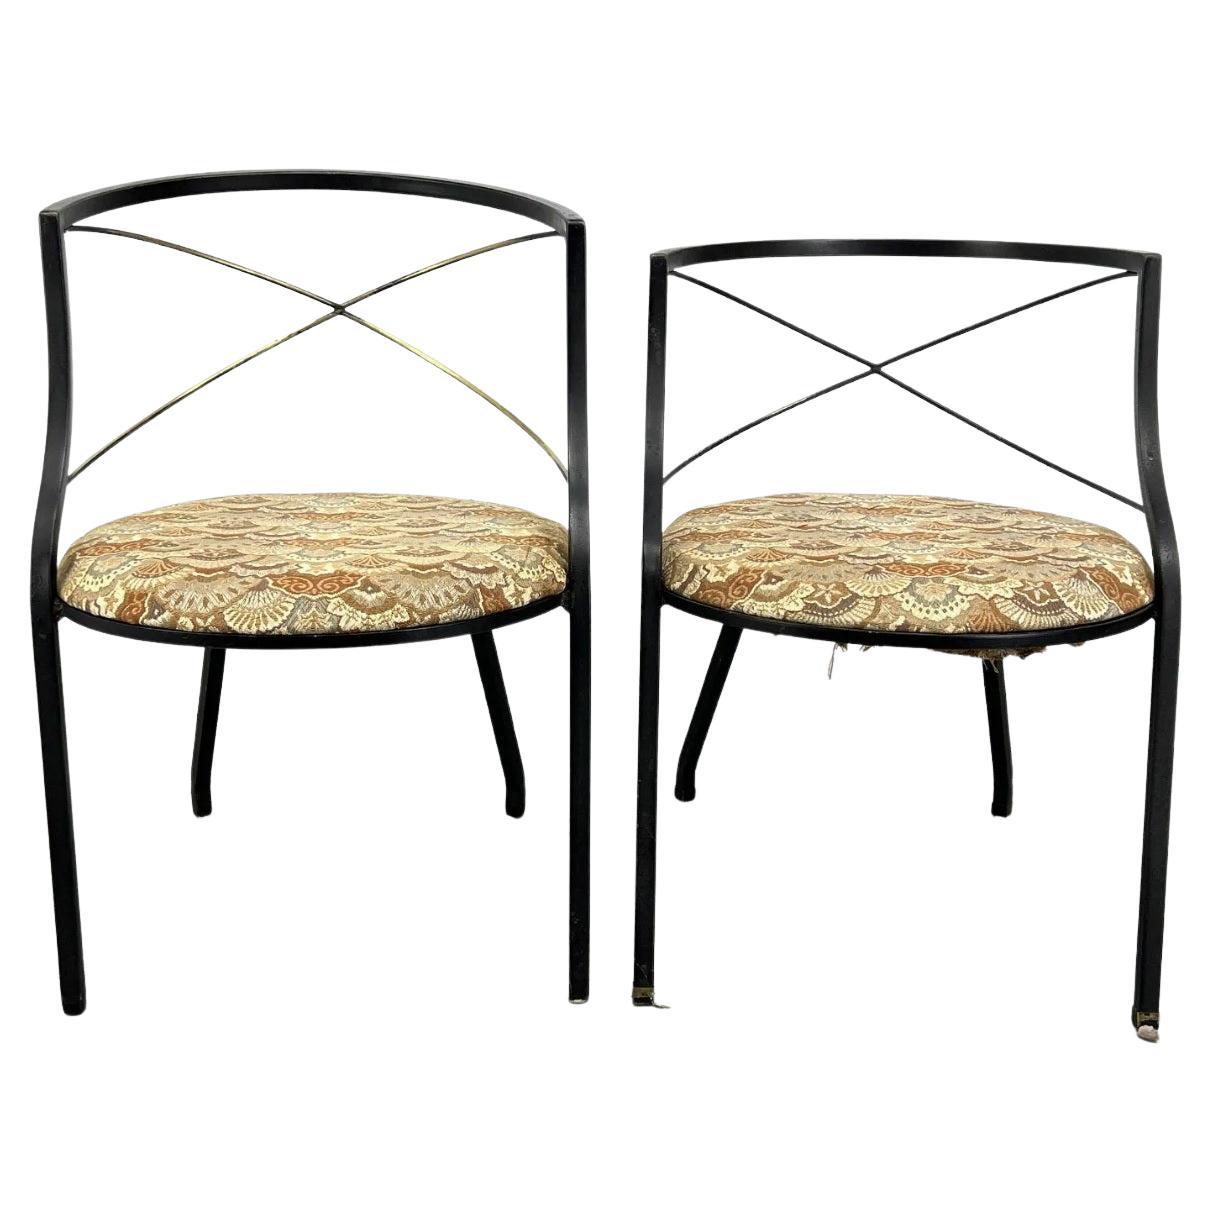 Set of Two Maison Jansen Style Bronze Patio Chairs